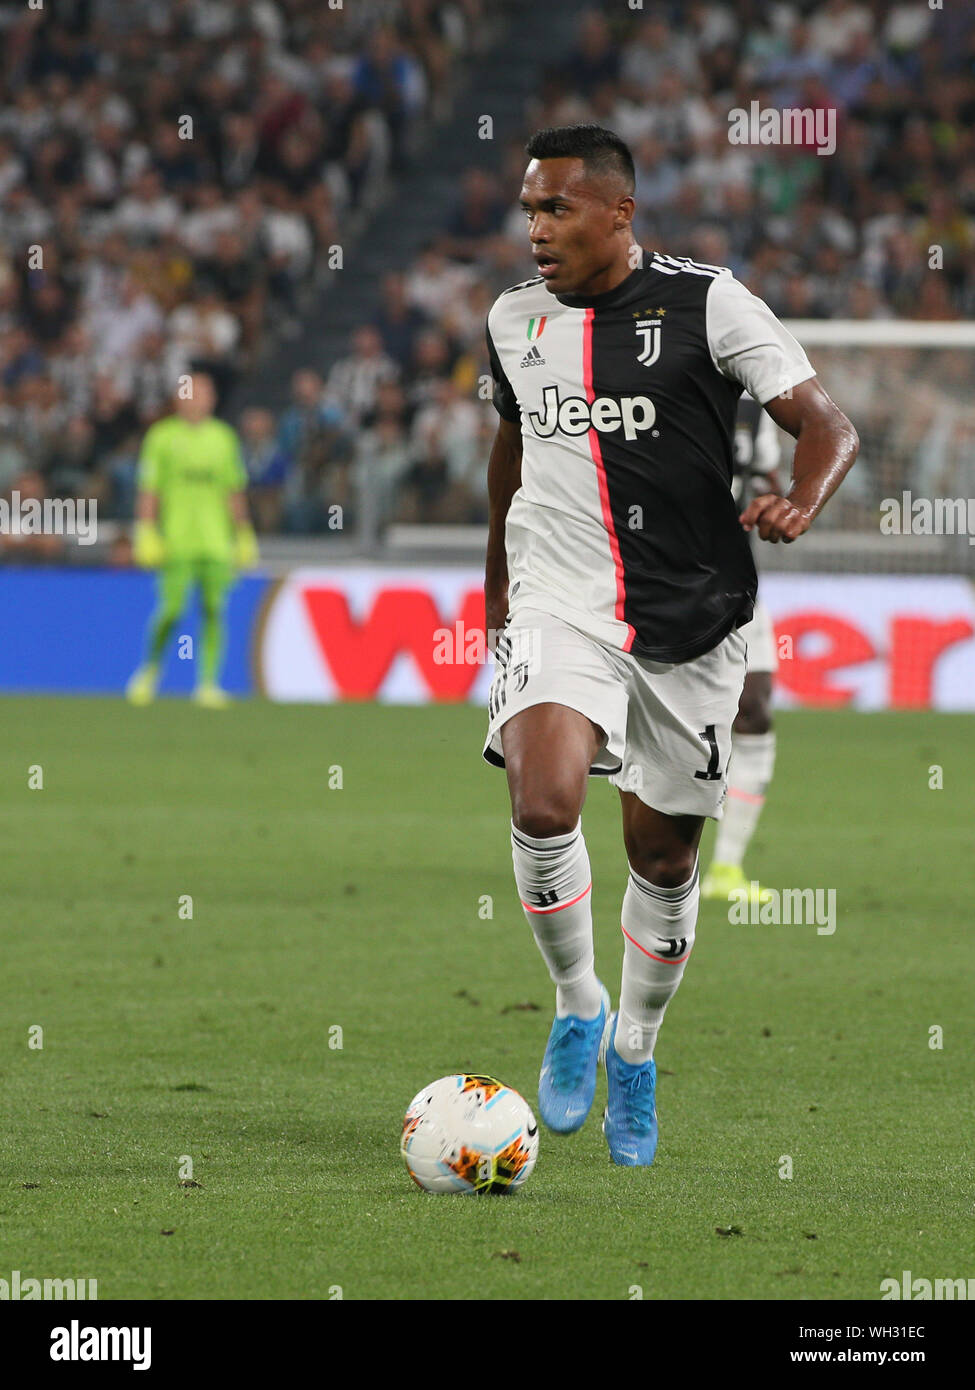 ALEX SANDRO during Juventus Vs Napoli, Torino, Italy, 31 Aug 2019, Football Italian Soccer Serie A Men Championship Stock Photo